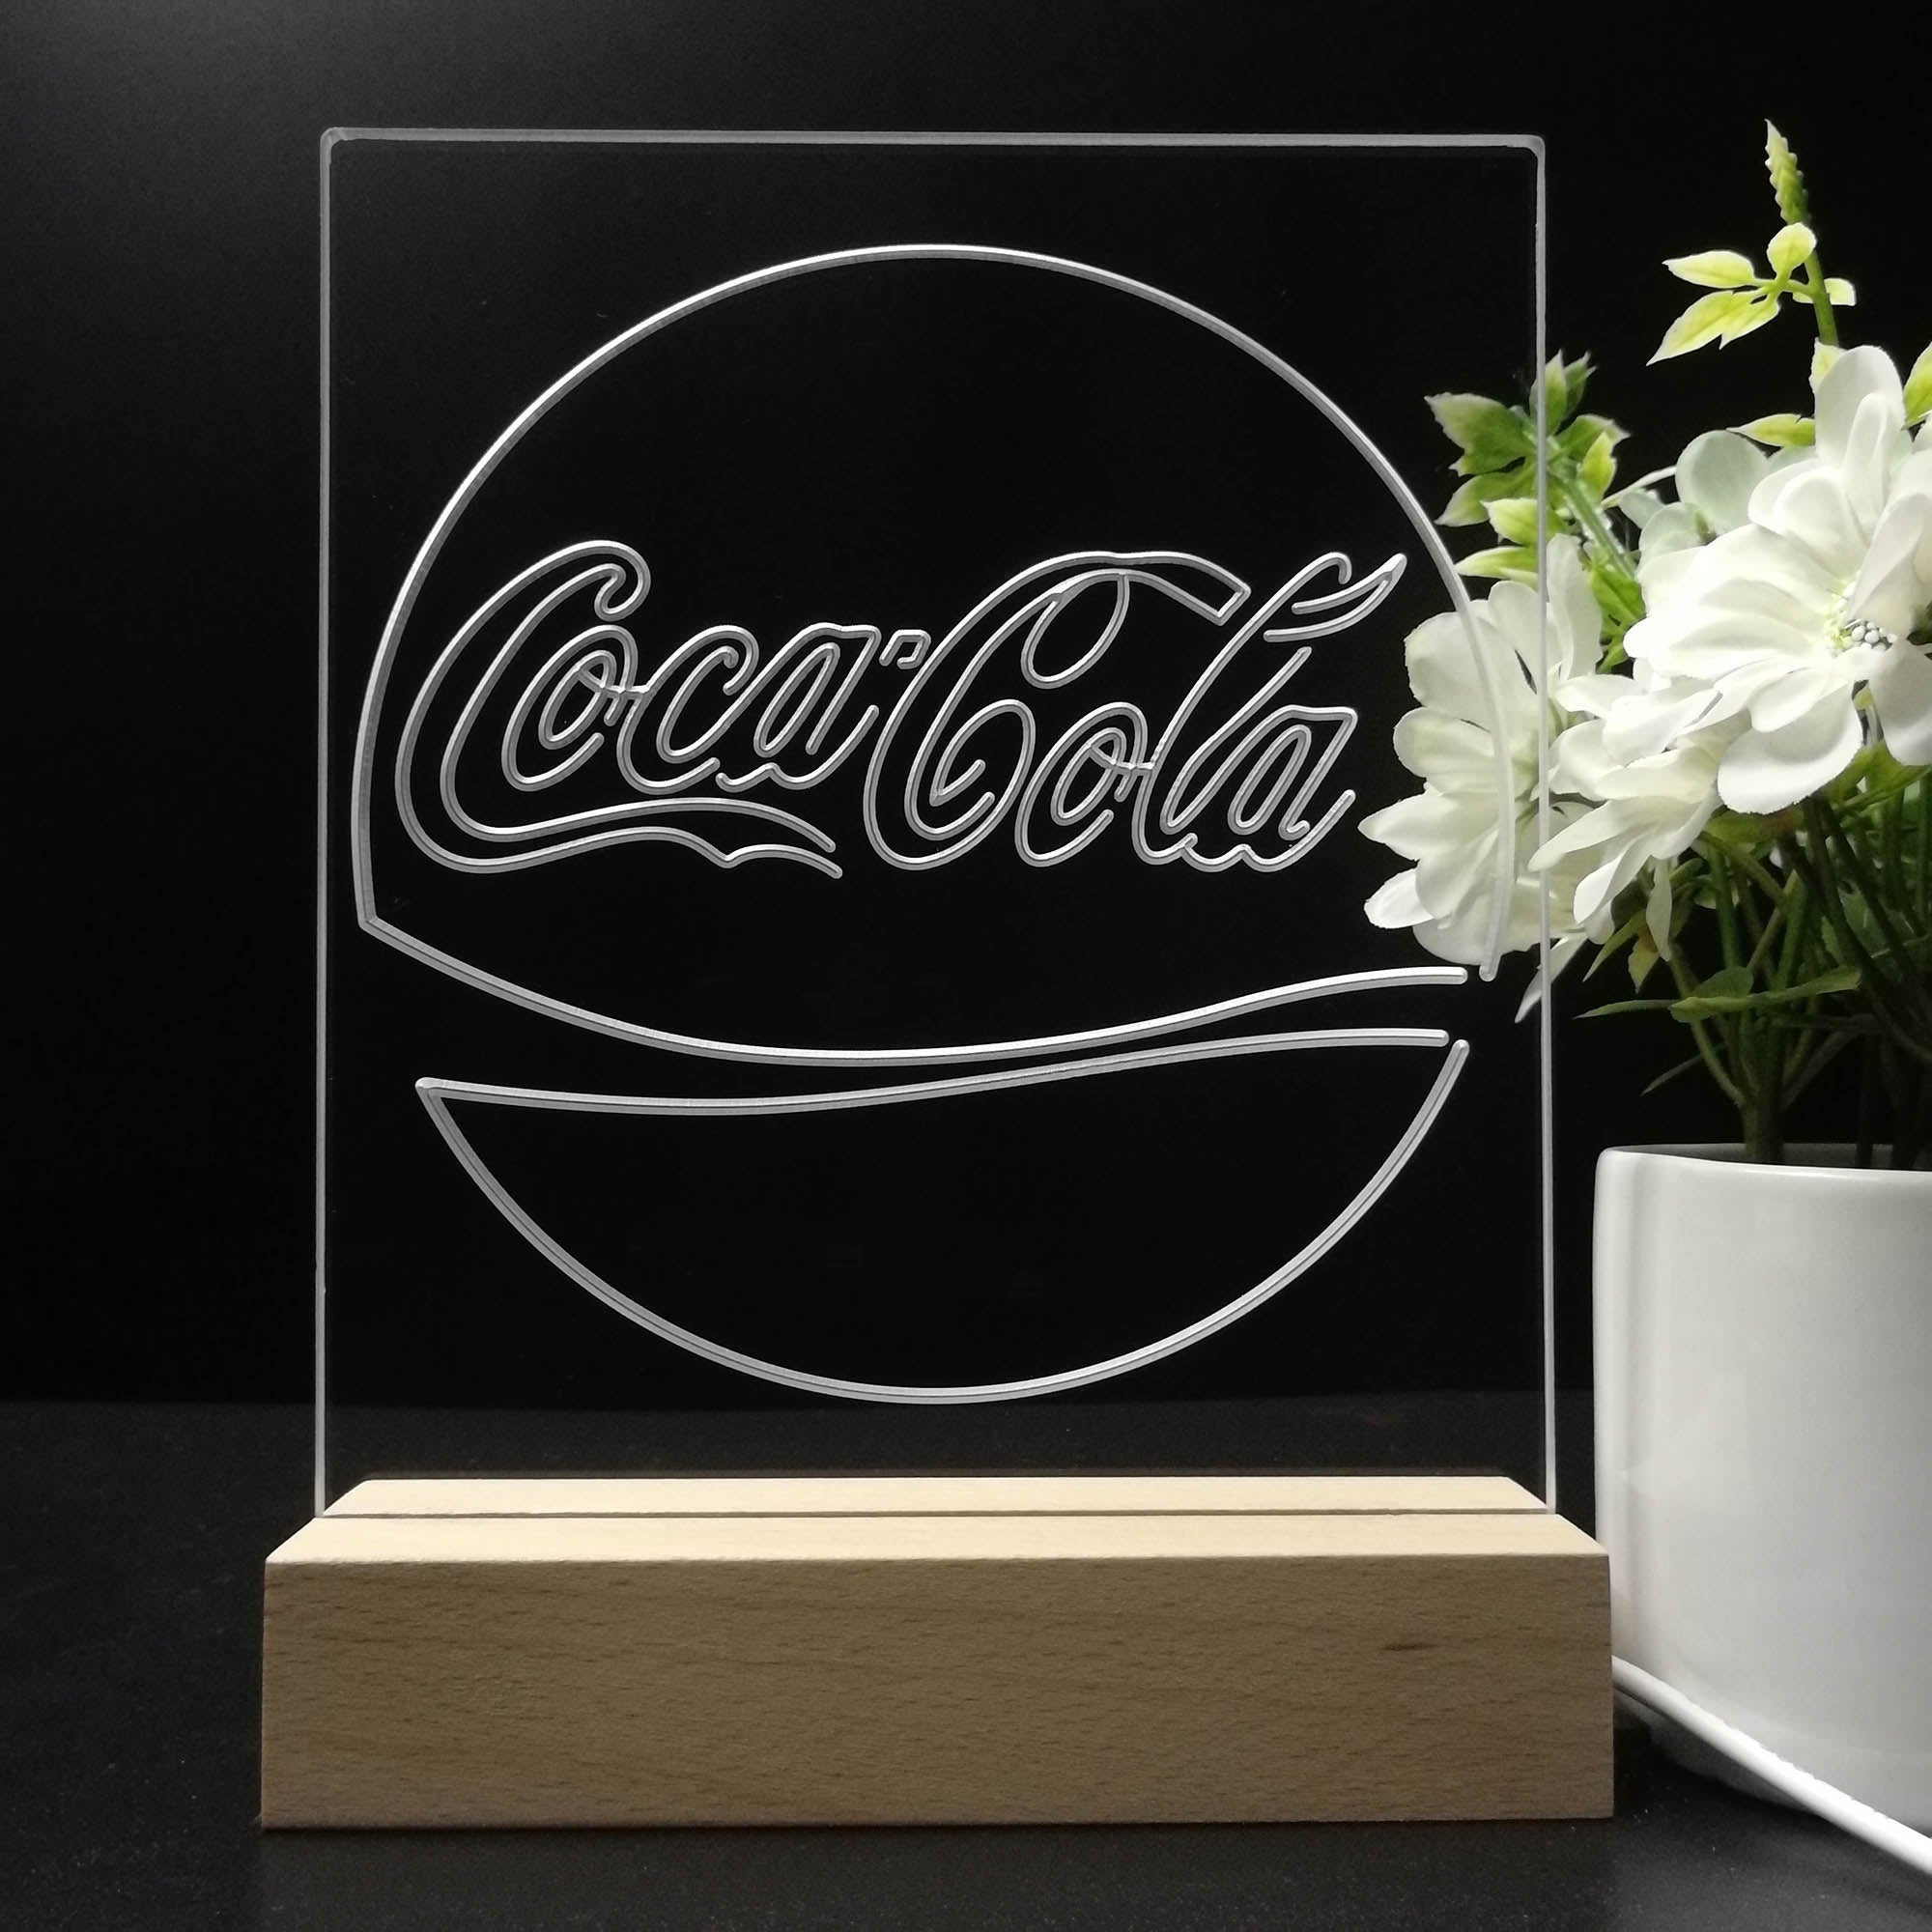 Coca Cola Classic Soft Drink Night Light LED Sign